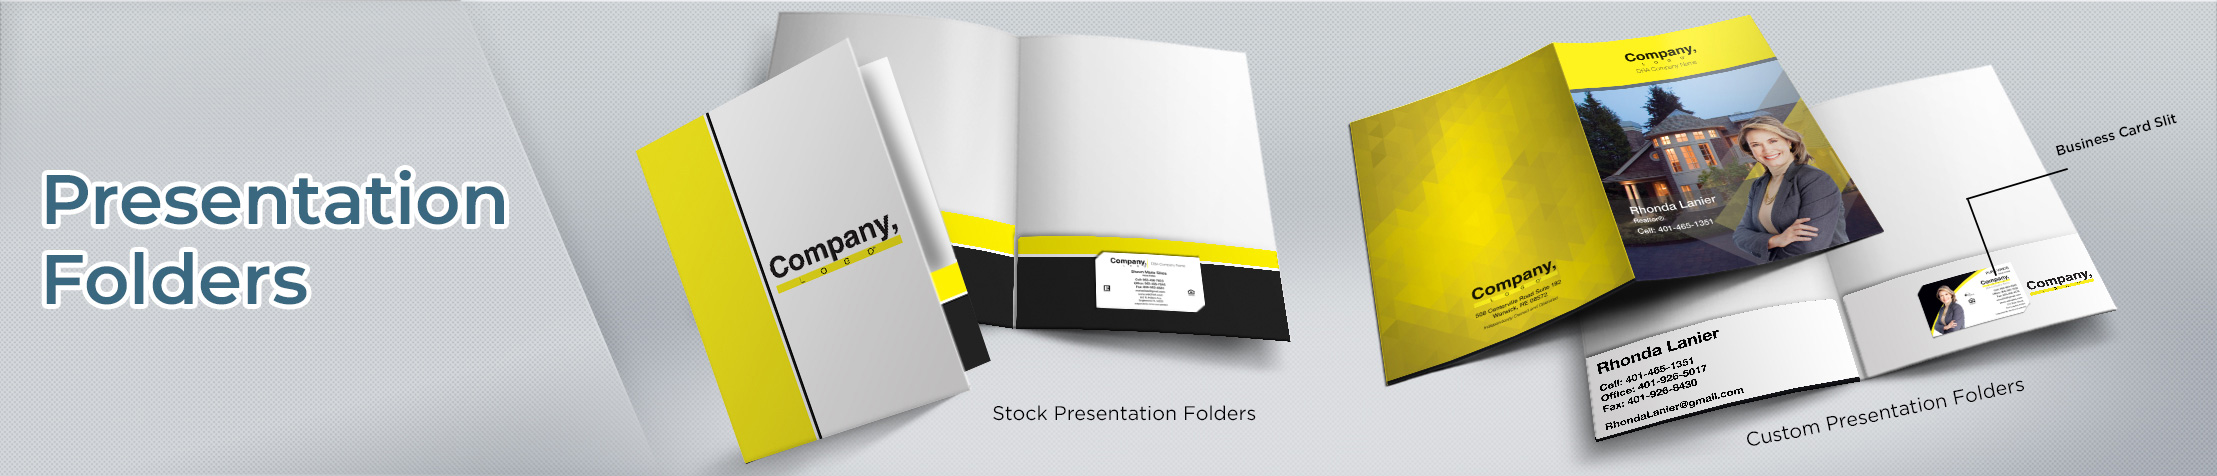 Weichert Real Estate Presentation Folders - folders | BestPrintBuy.com